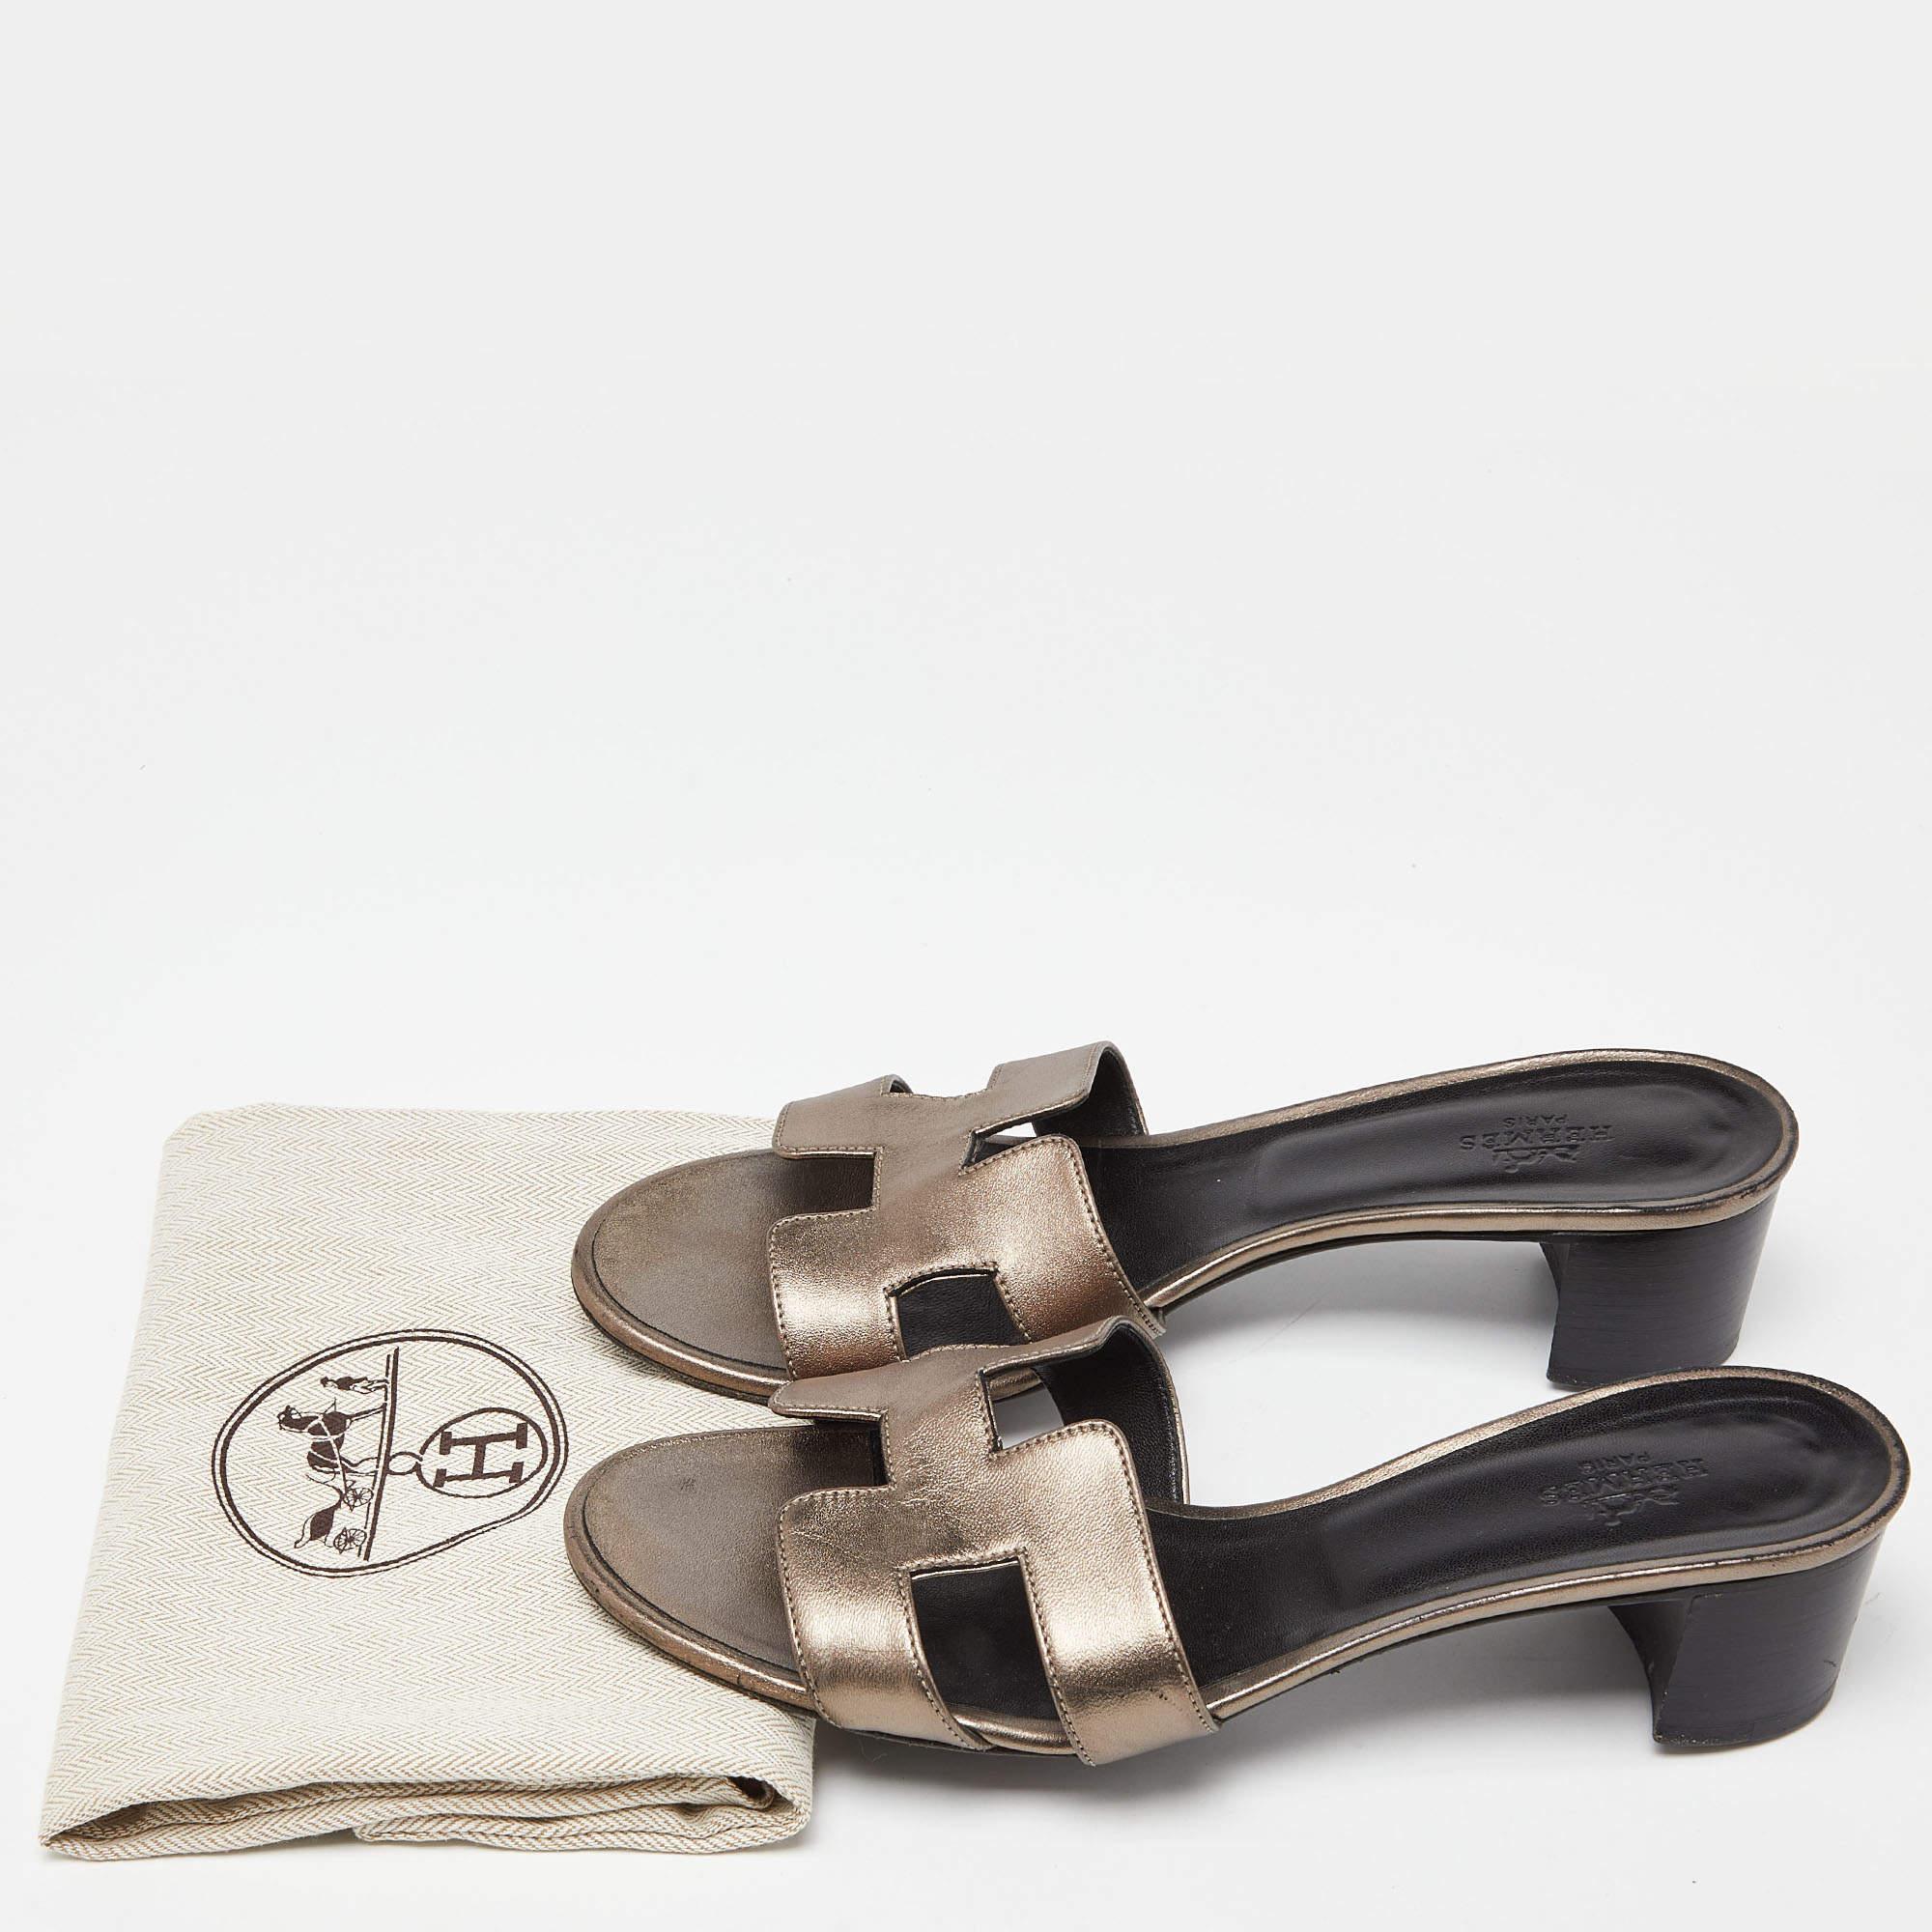 Hermes Metallic Leather Oasis Slide Sandals Size 38 5